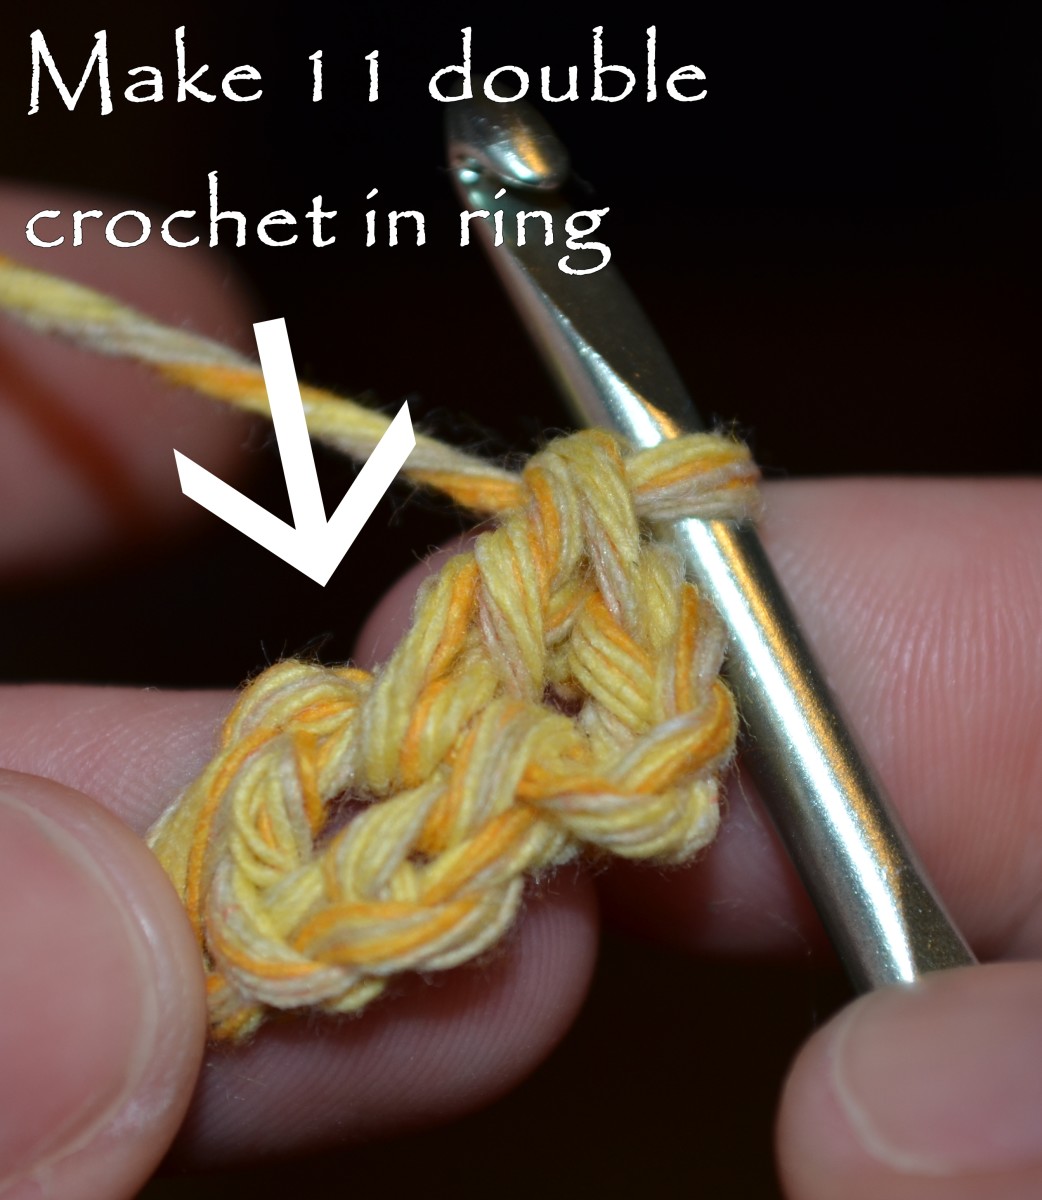 Make 11 double crochet in ring.